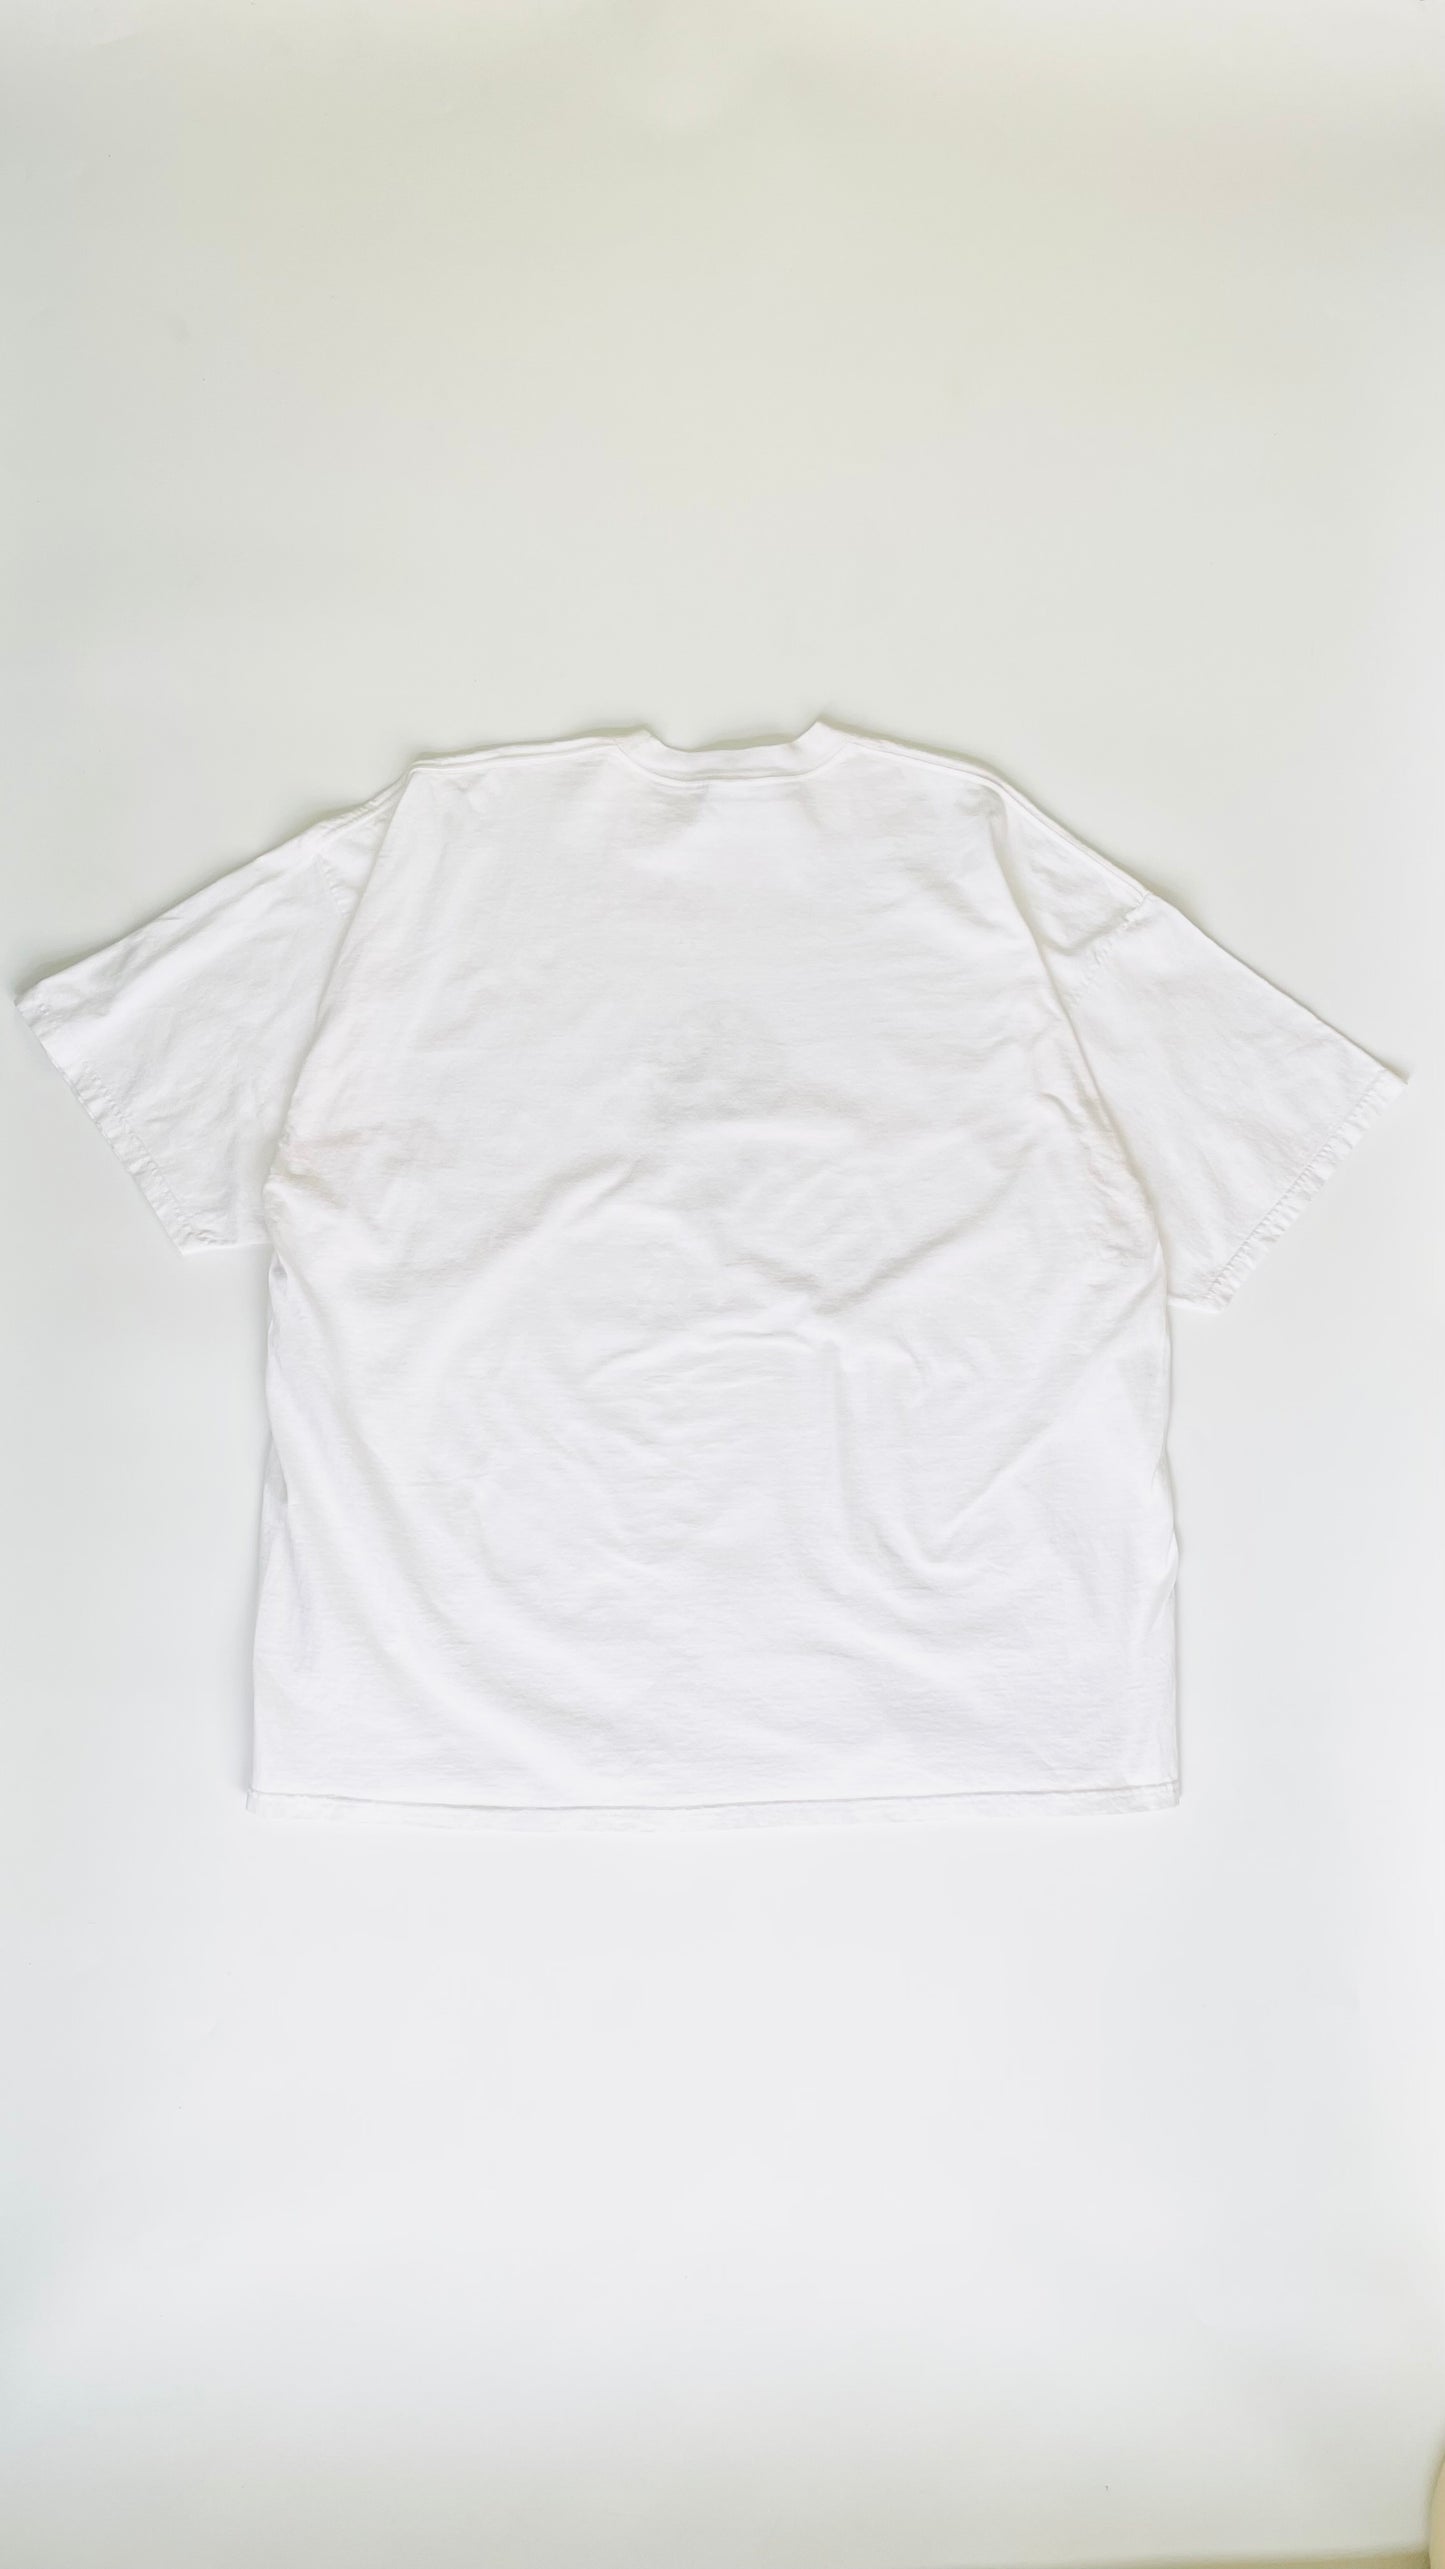 90s White So So Def logo t-shirt  - Size 4XL